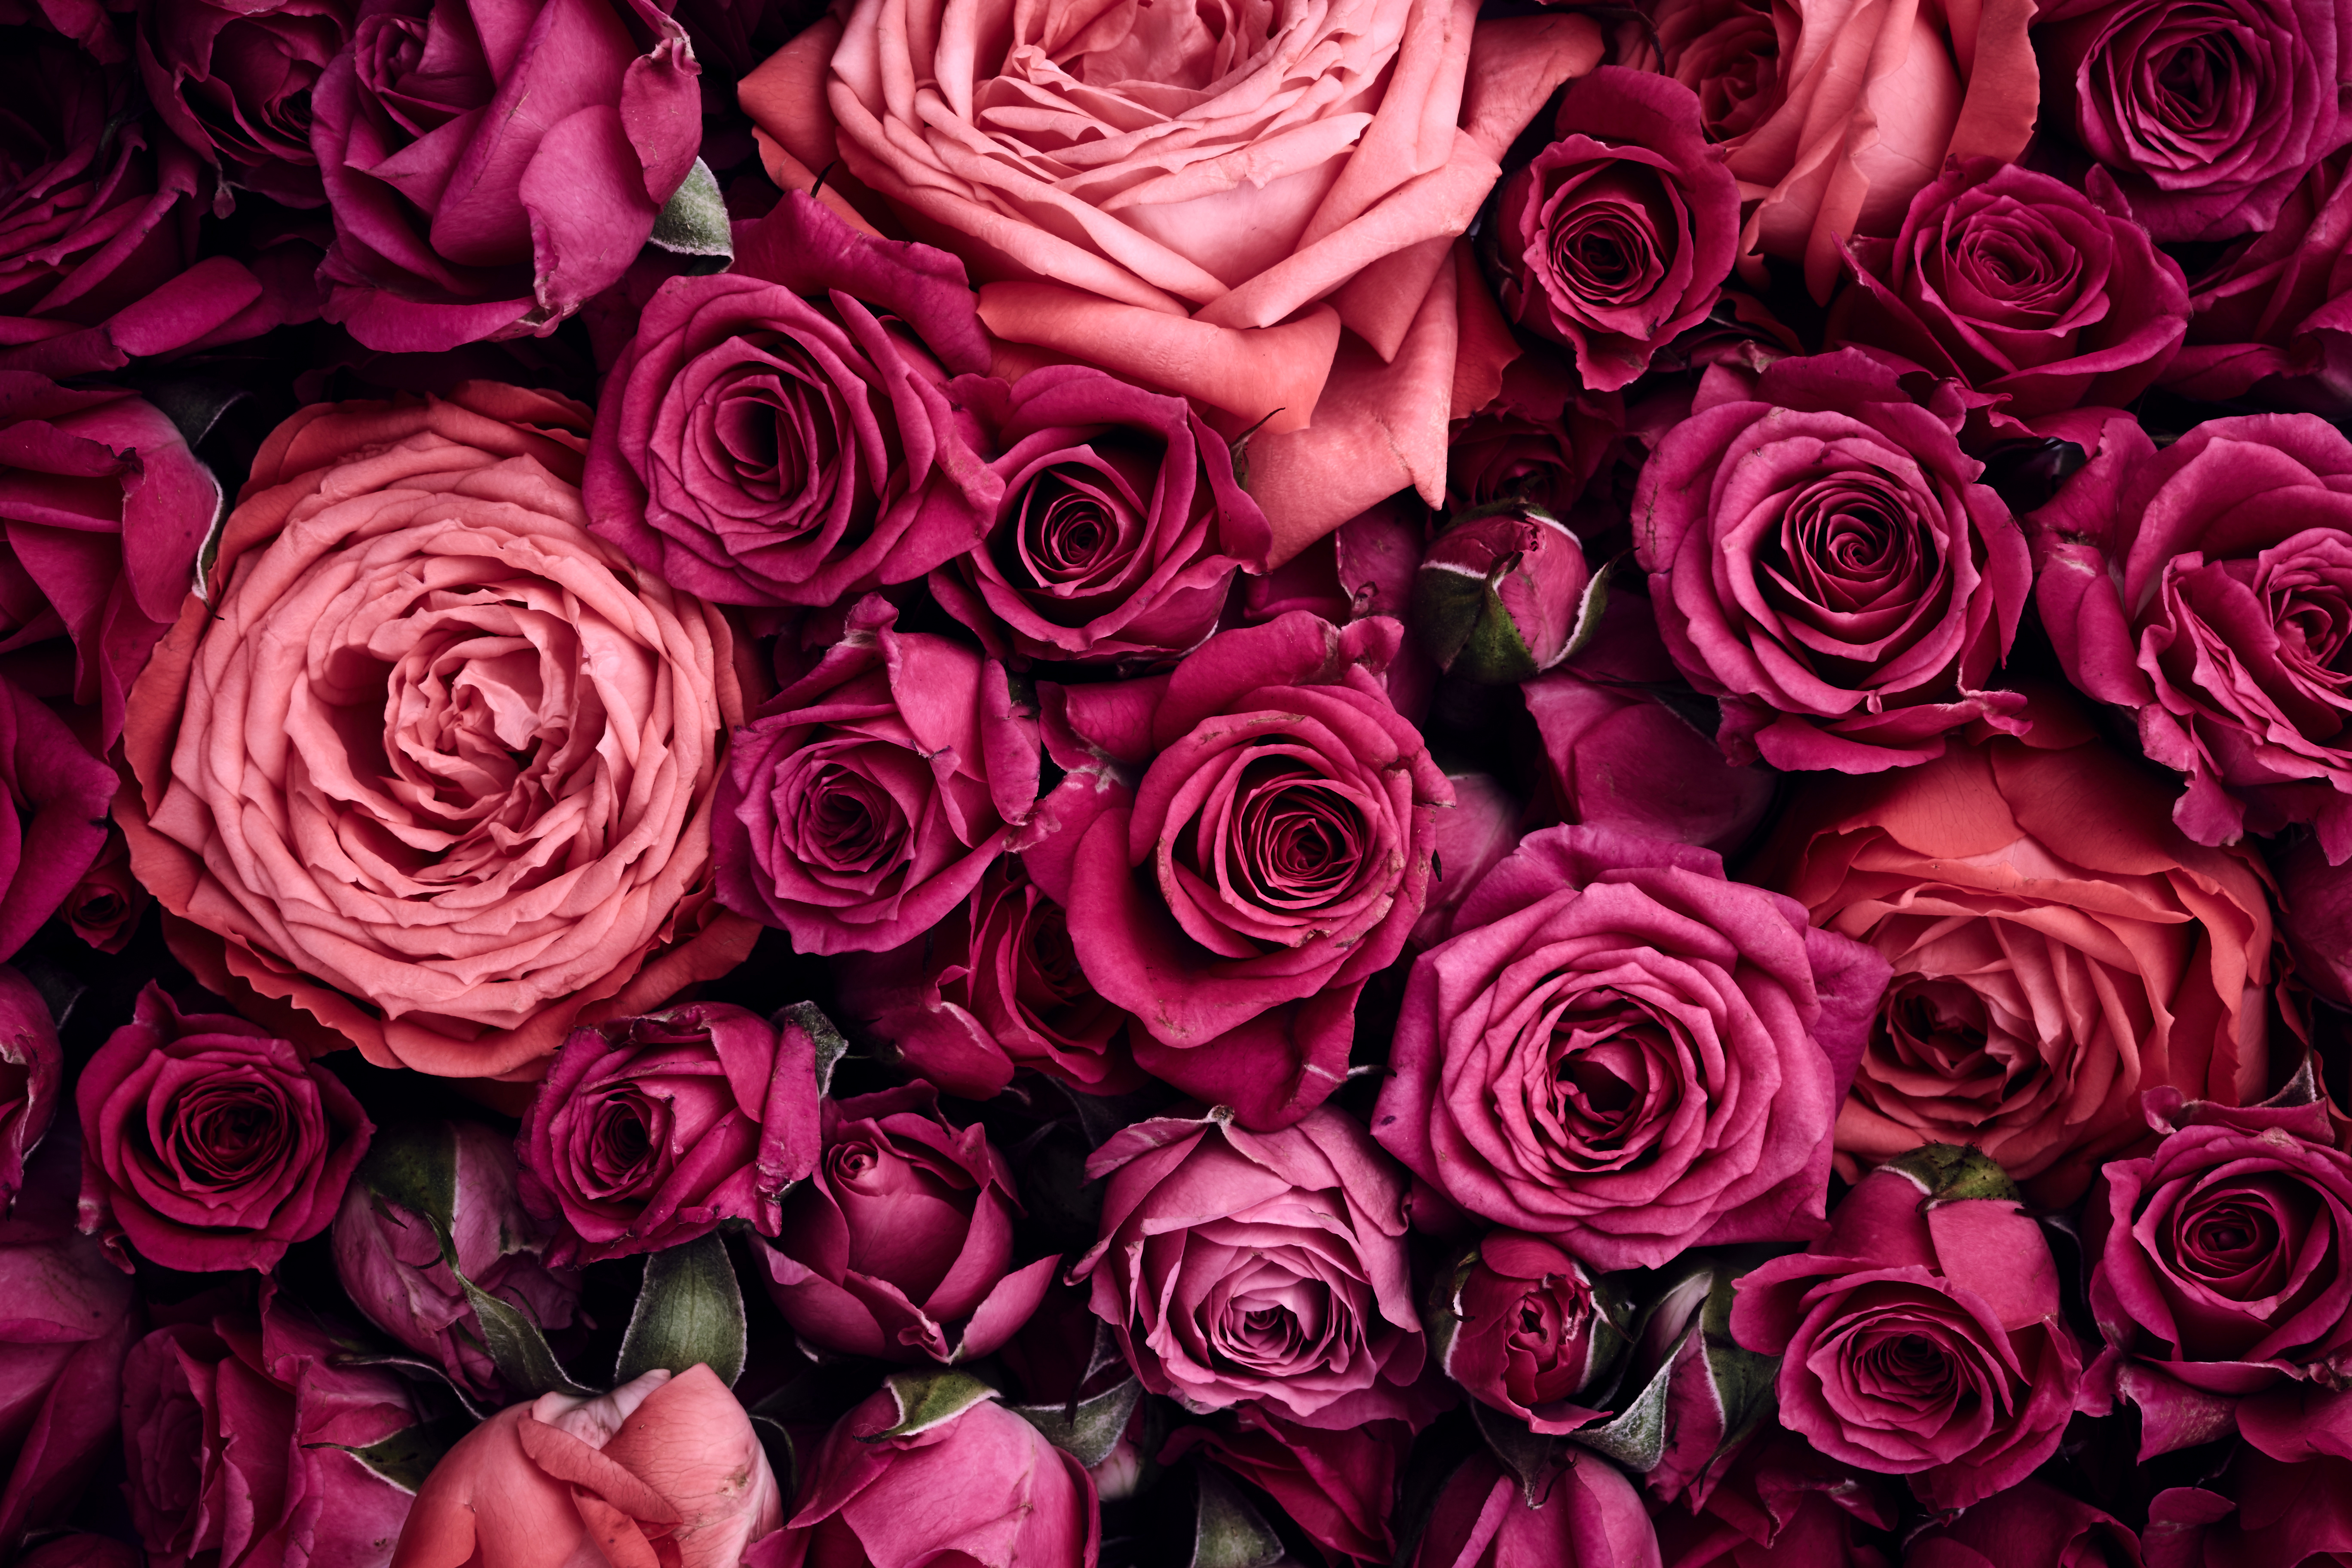 Roses Cover Photos For Facebook - HD Wallpaper 